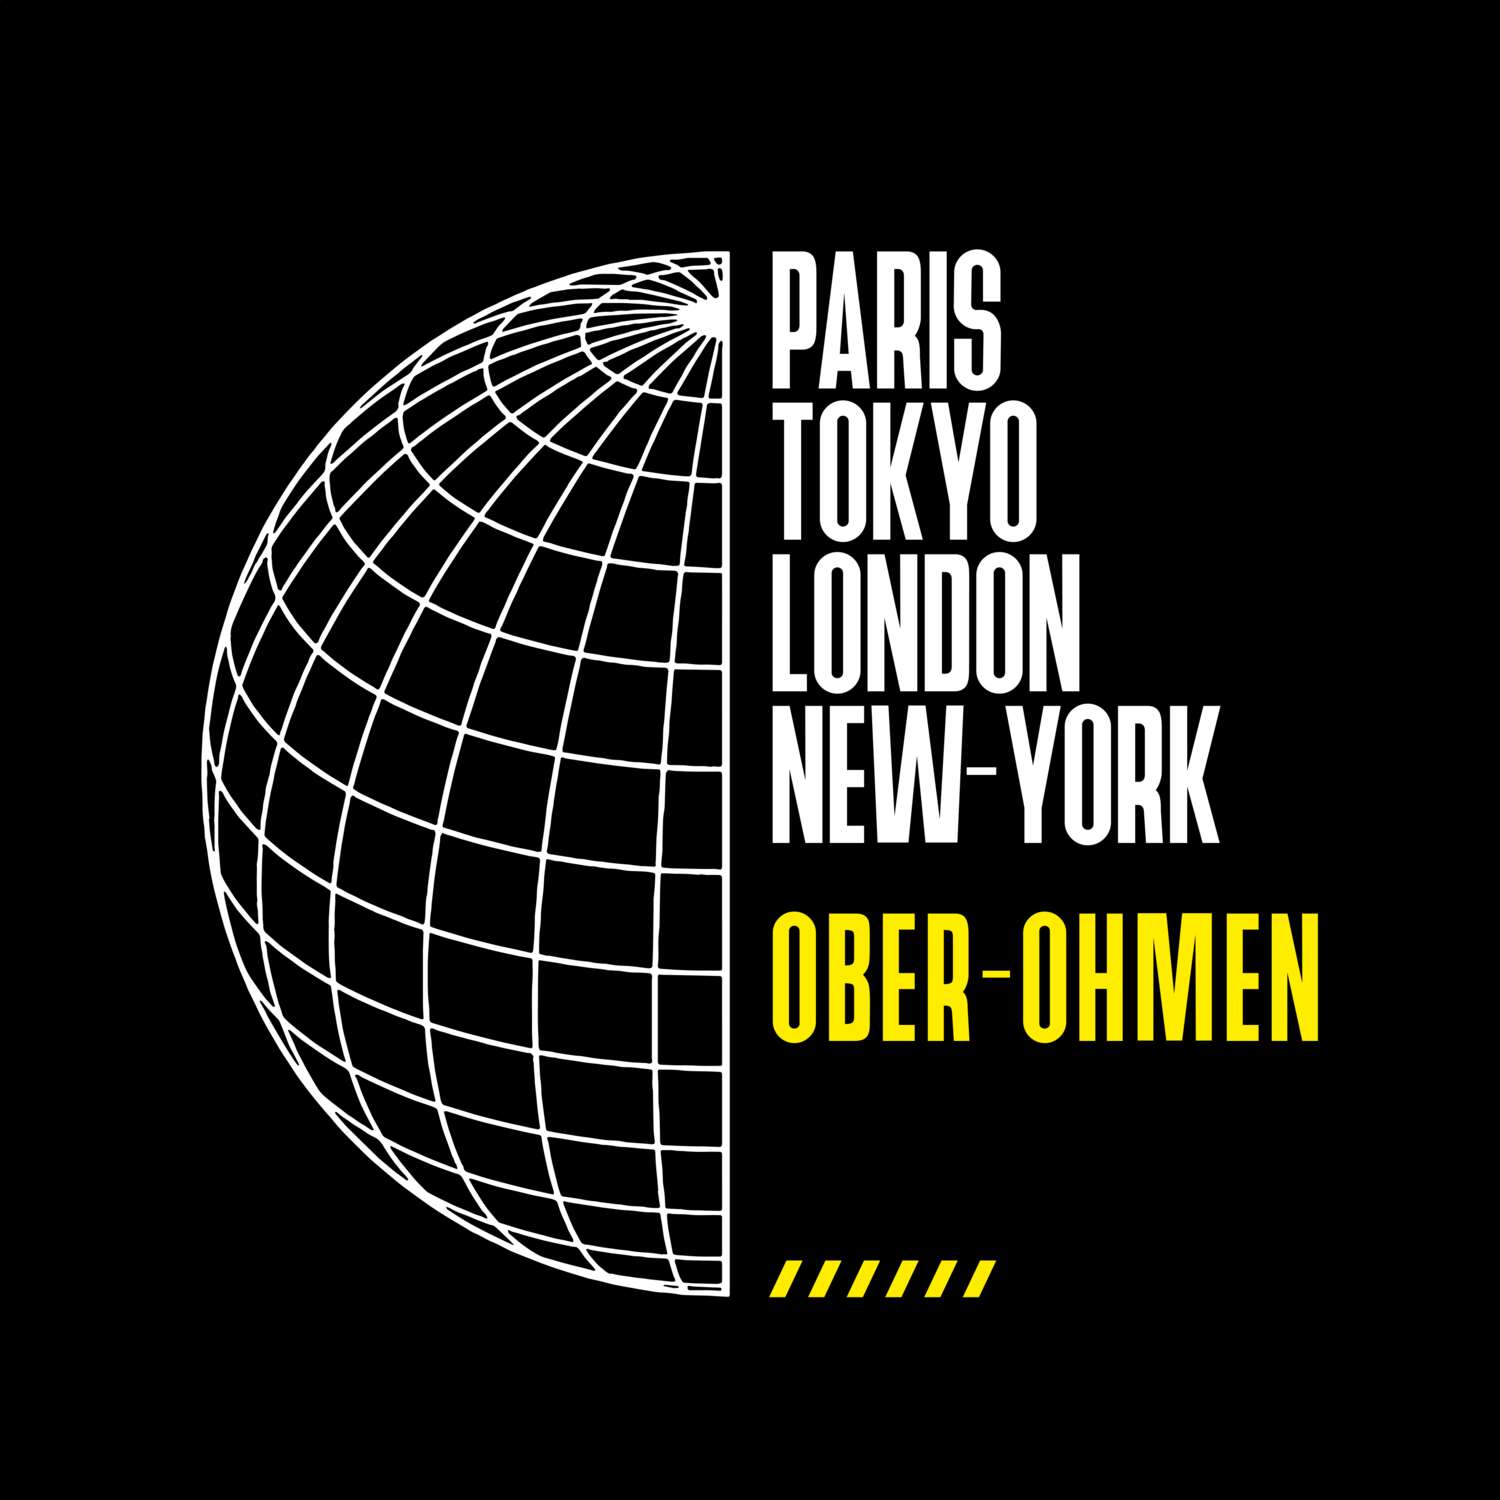 Ober-Ohmen T-Shirt »Paris Tokyo London«